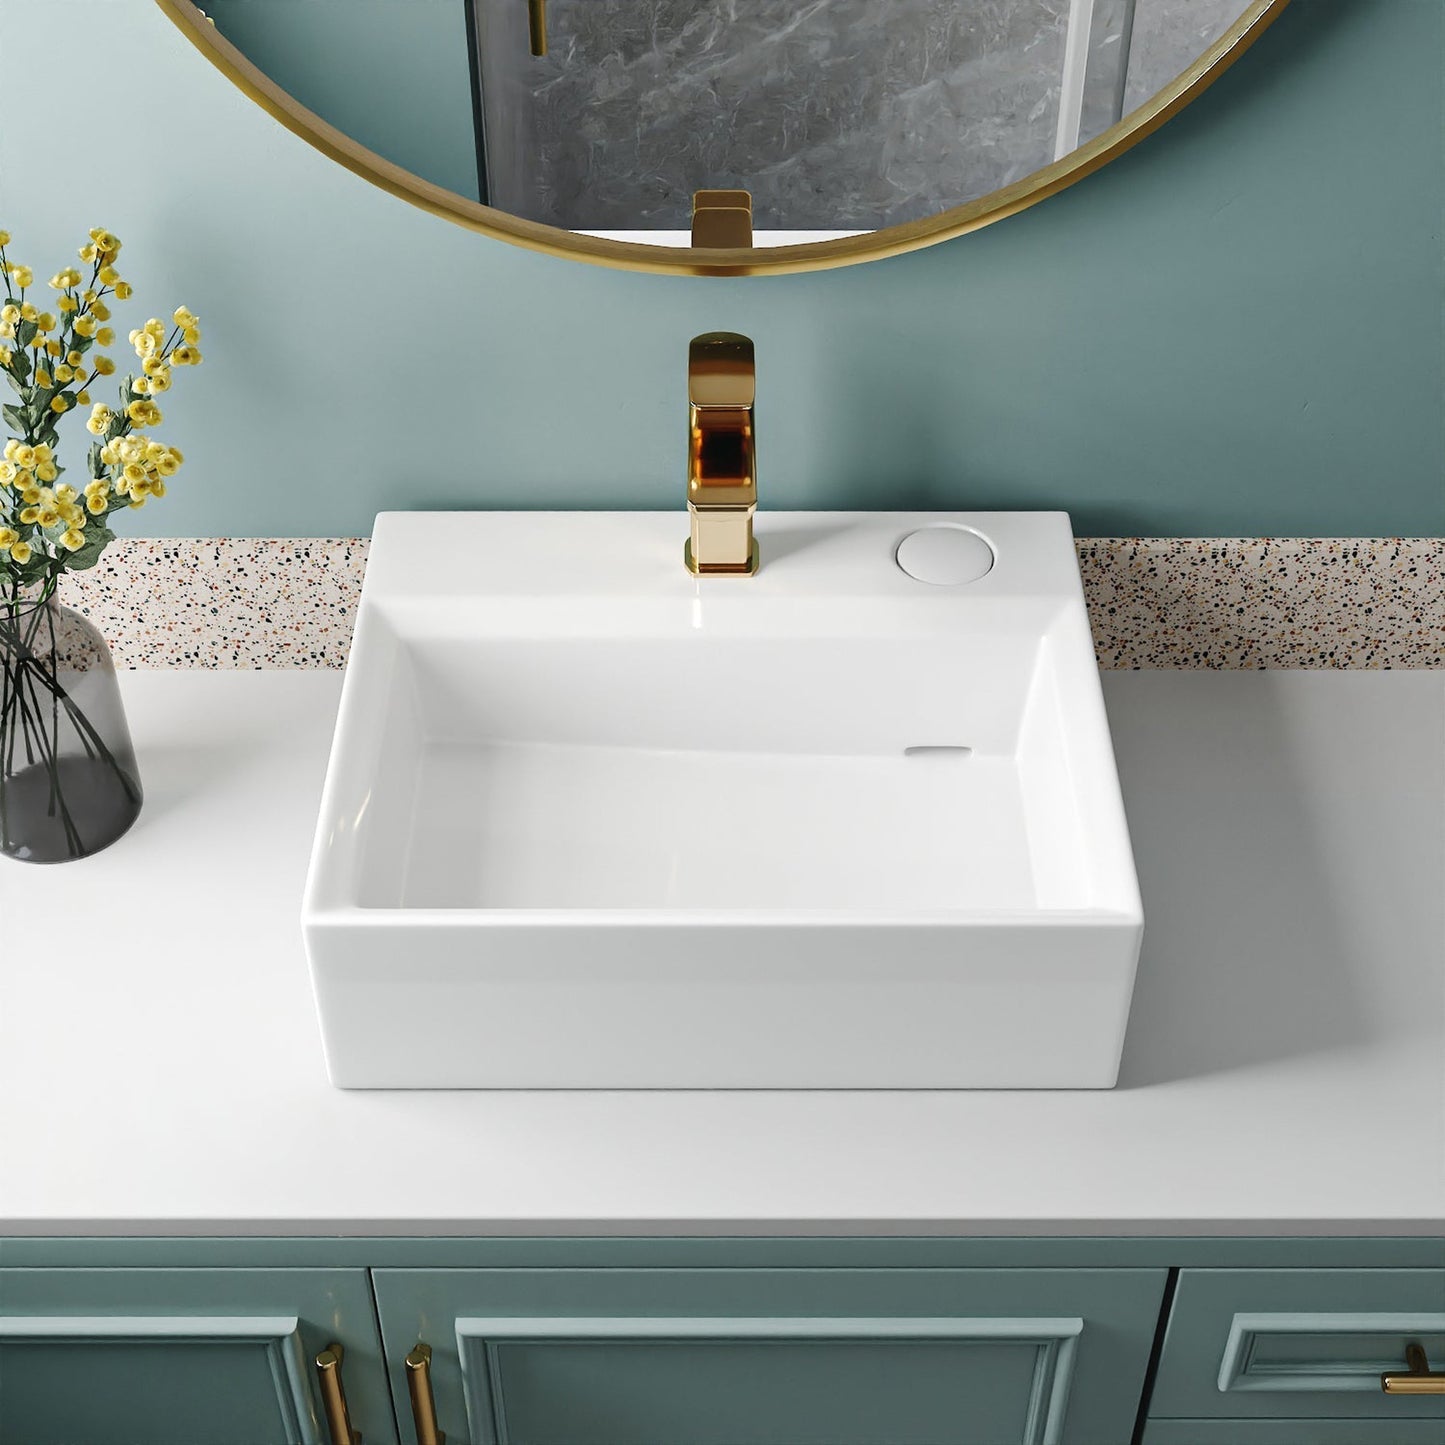 DeerValley Apex 17" Rectangular White Vessel Bathroom Sink With Hidden Drainage